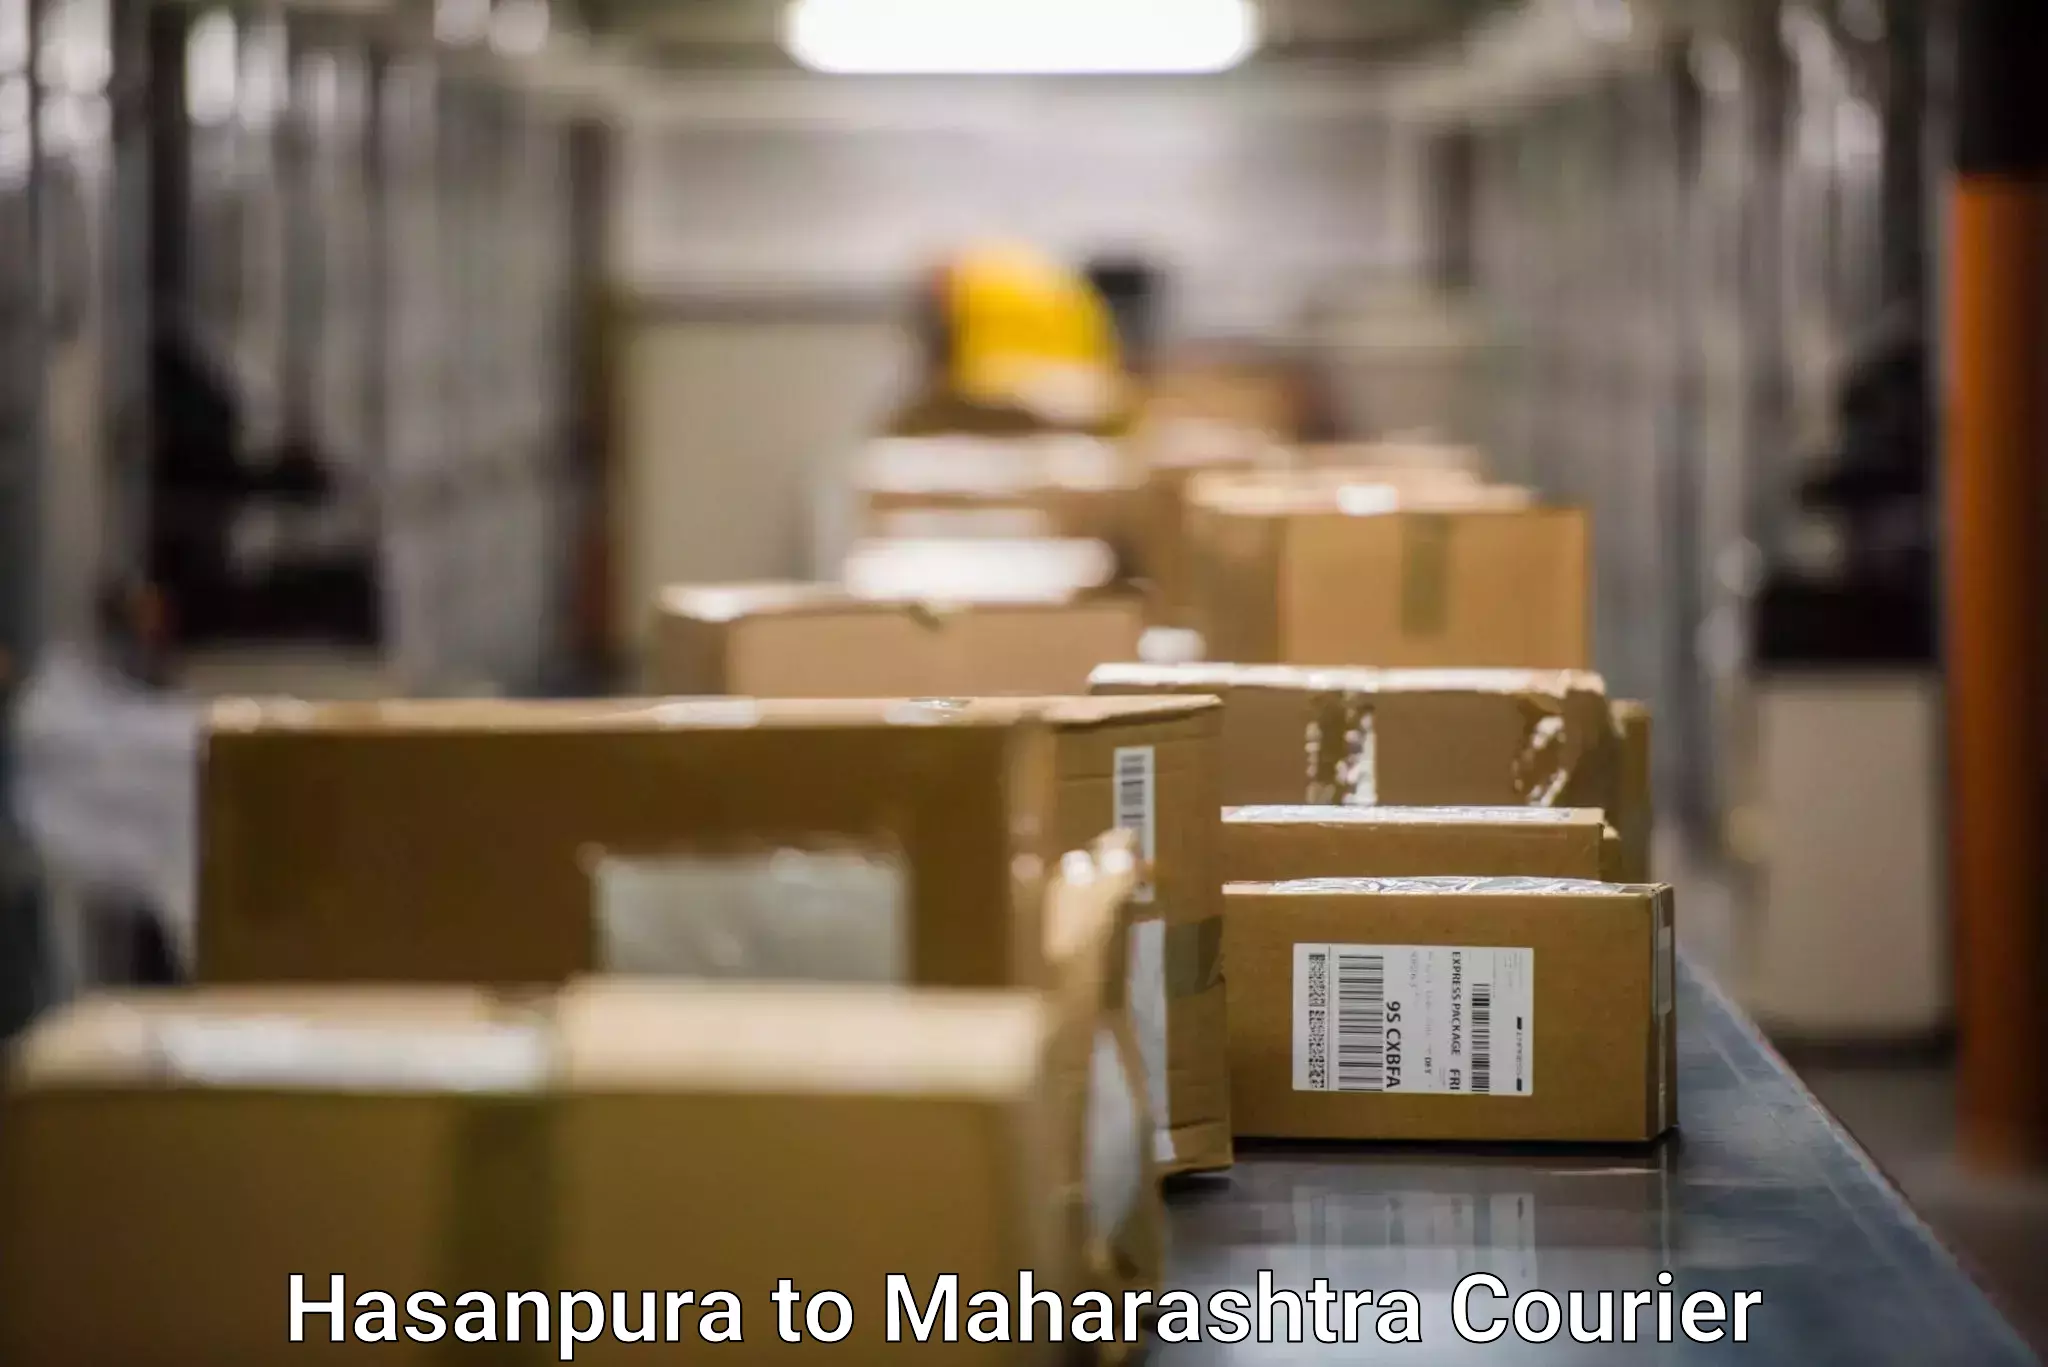 Express courier facilities in Hasanpura to Ulhasnagar